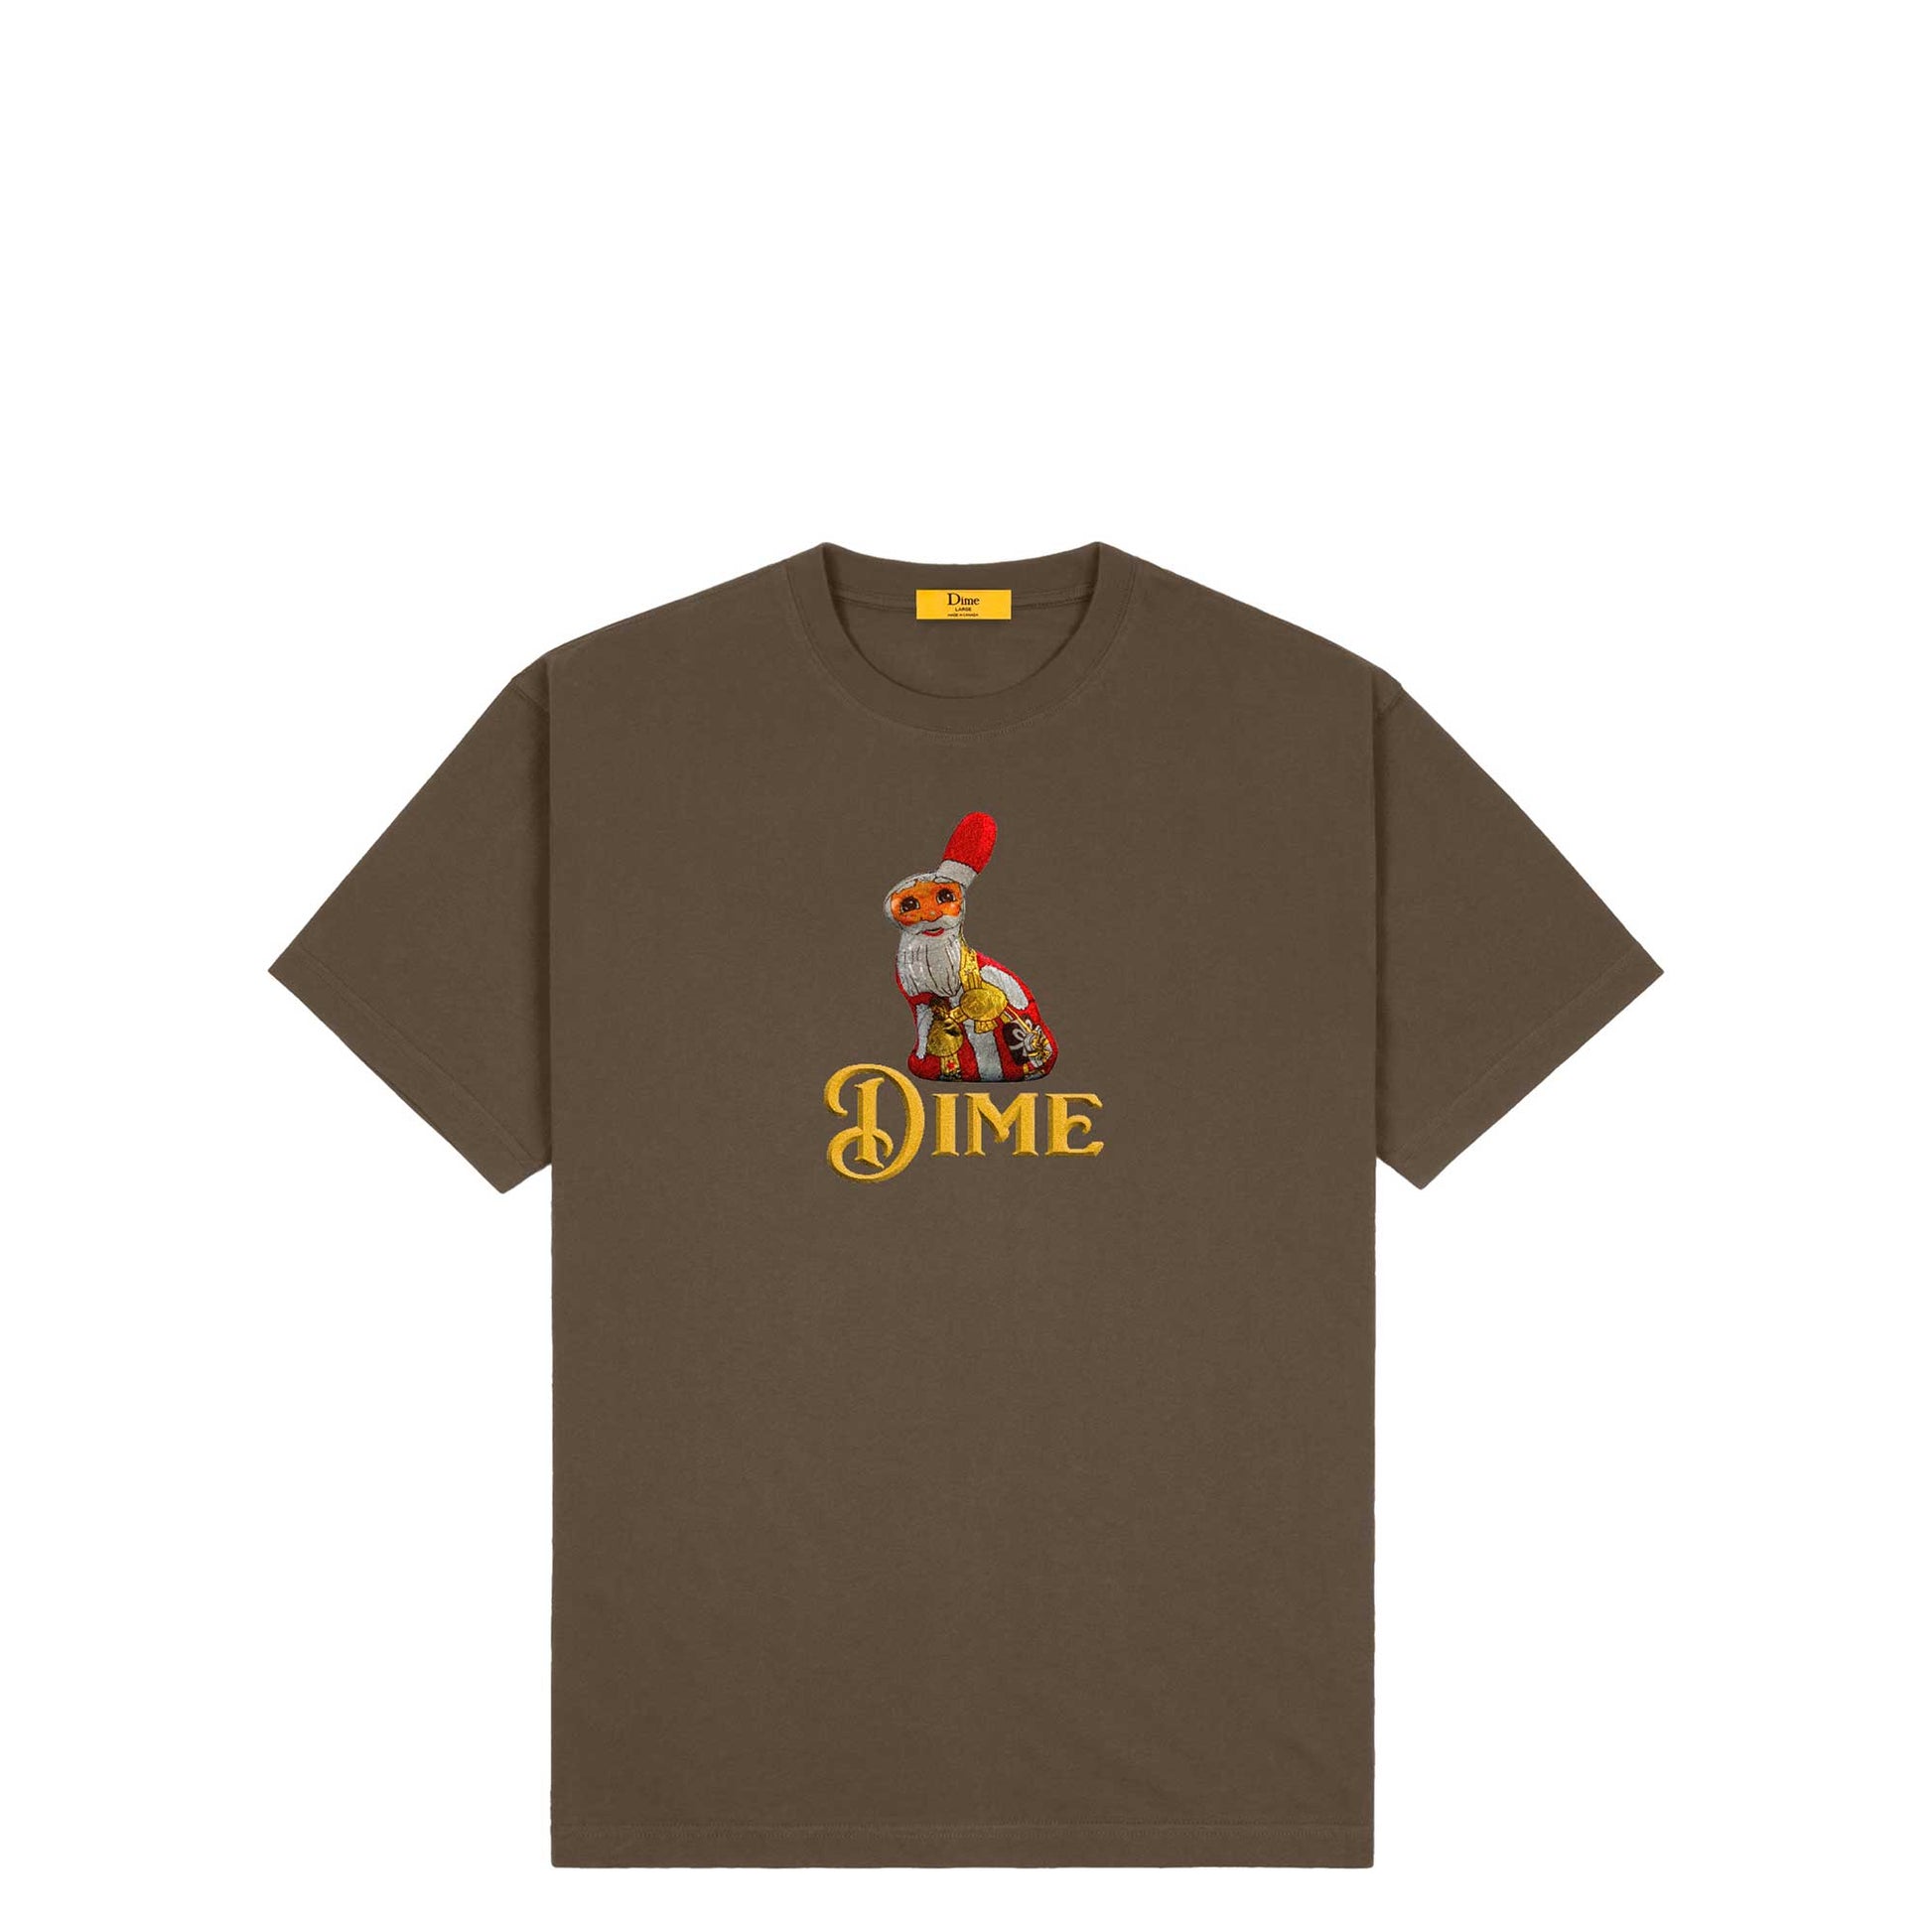 Dime Santa Bunny T-Shirt, walnut - Tiki Room Skateboards - 1